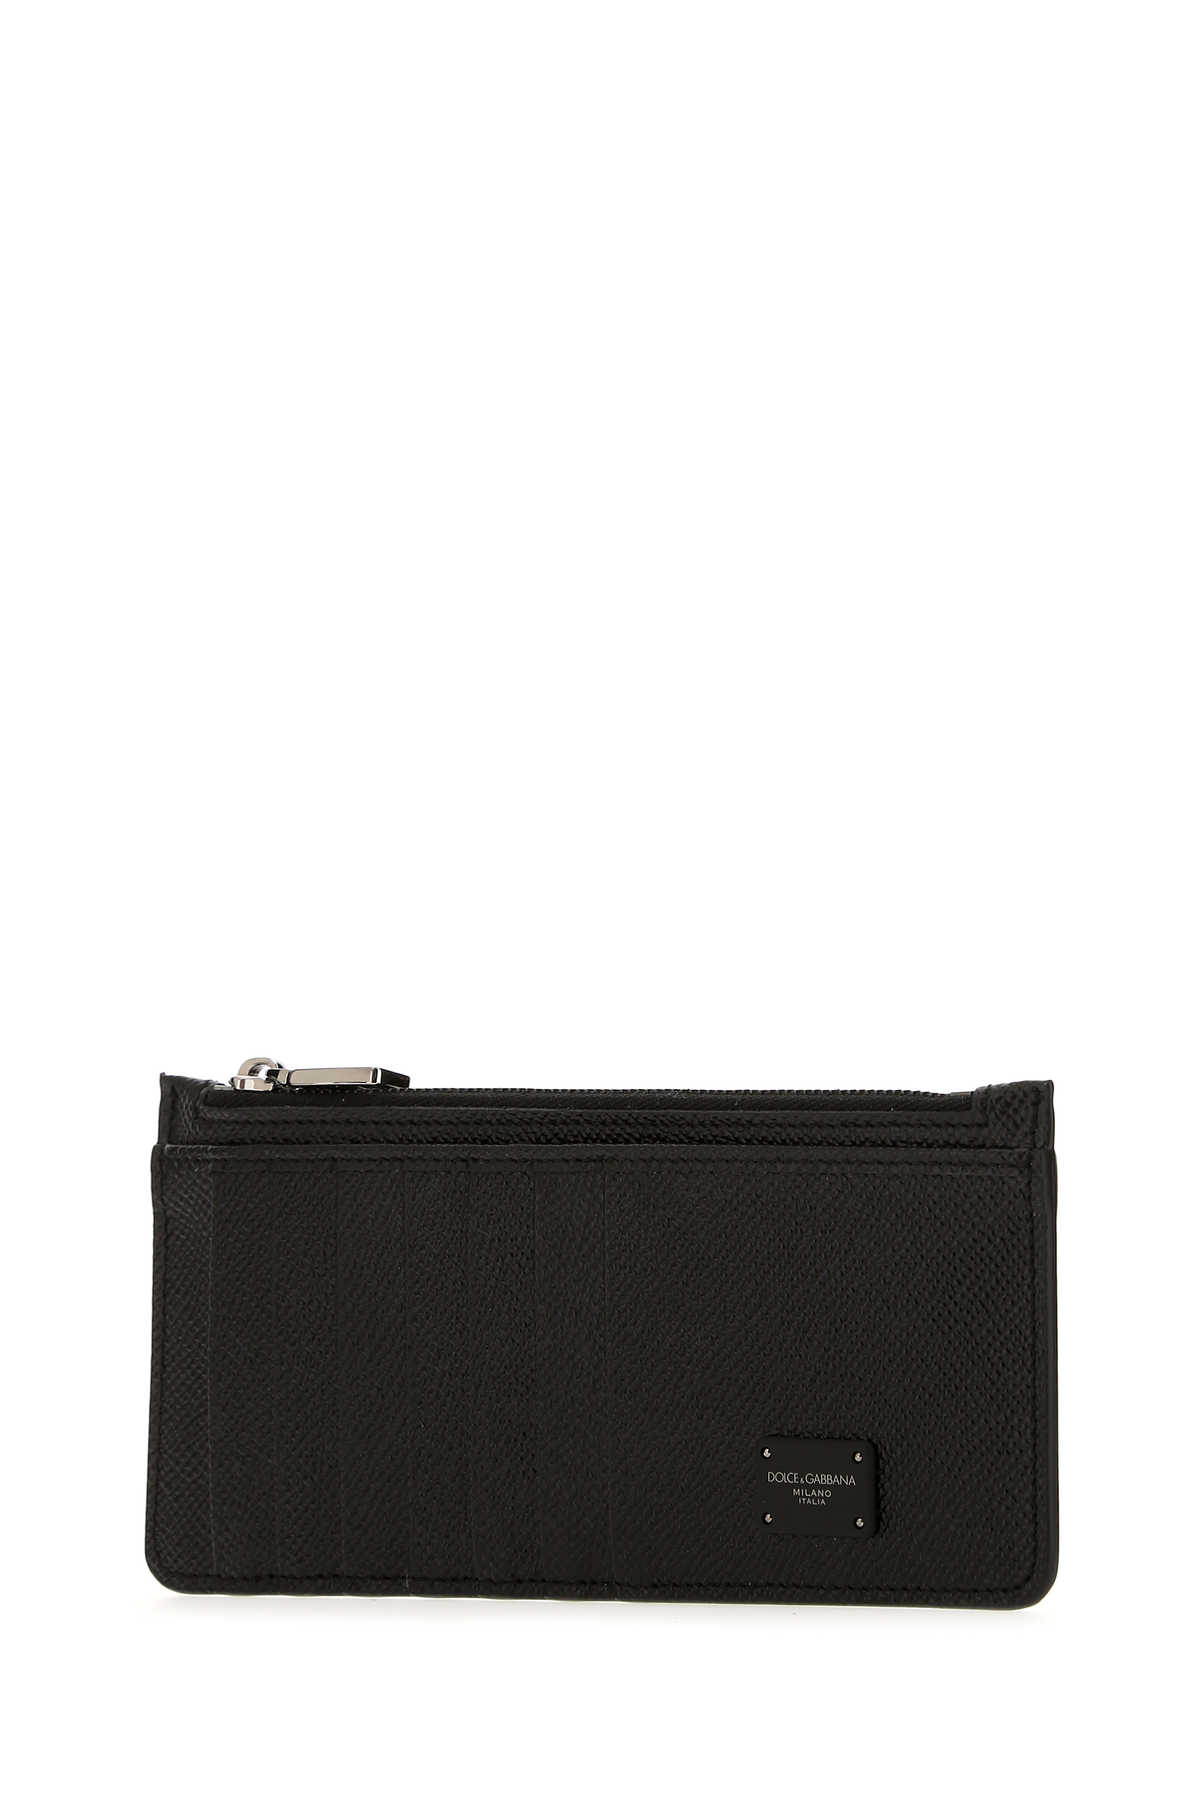 Dolce & Gabbana Black Leather Card Holder In 80999